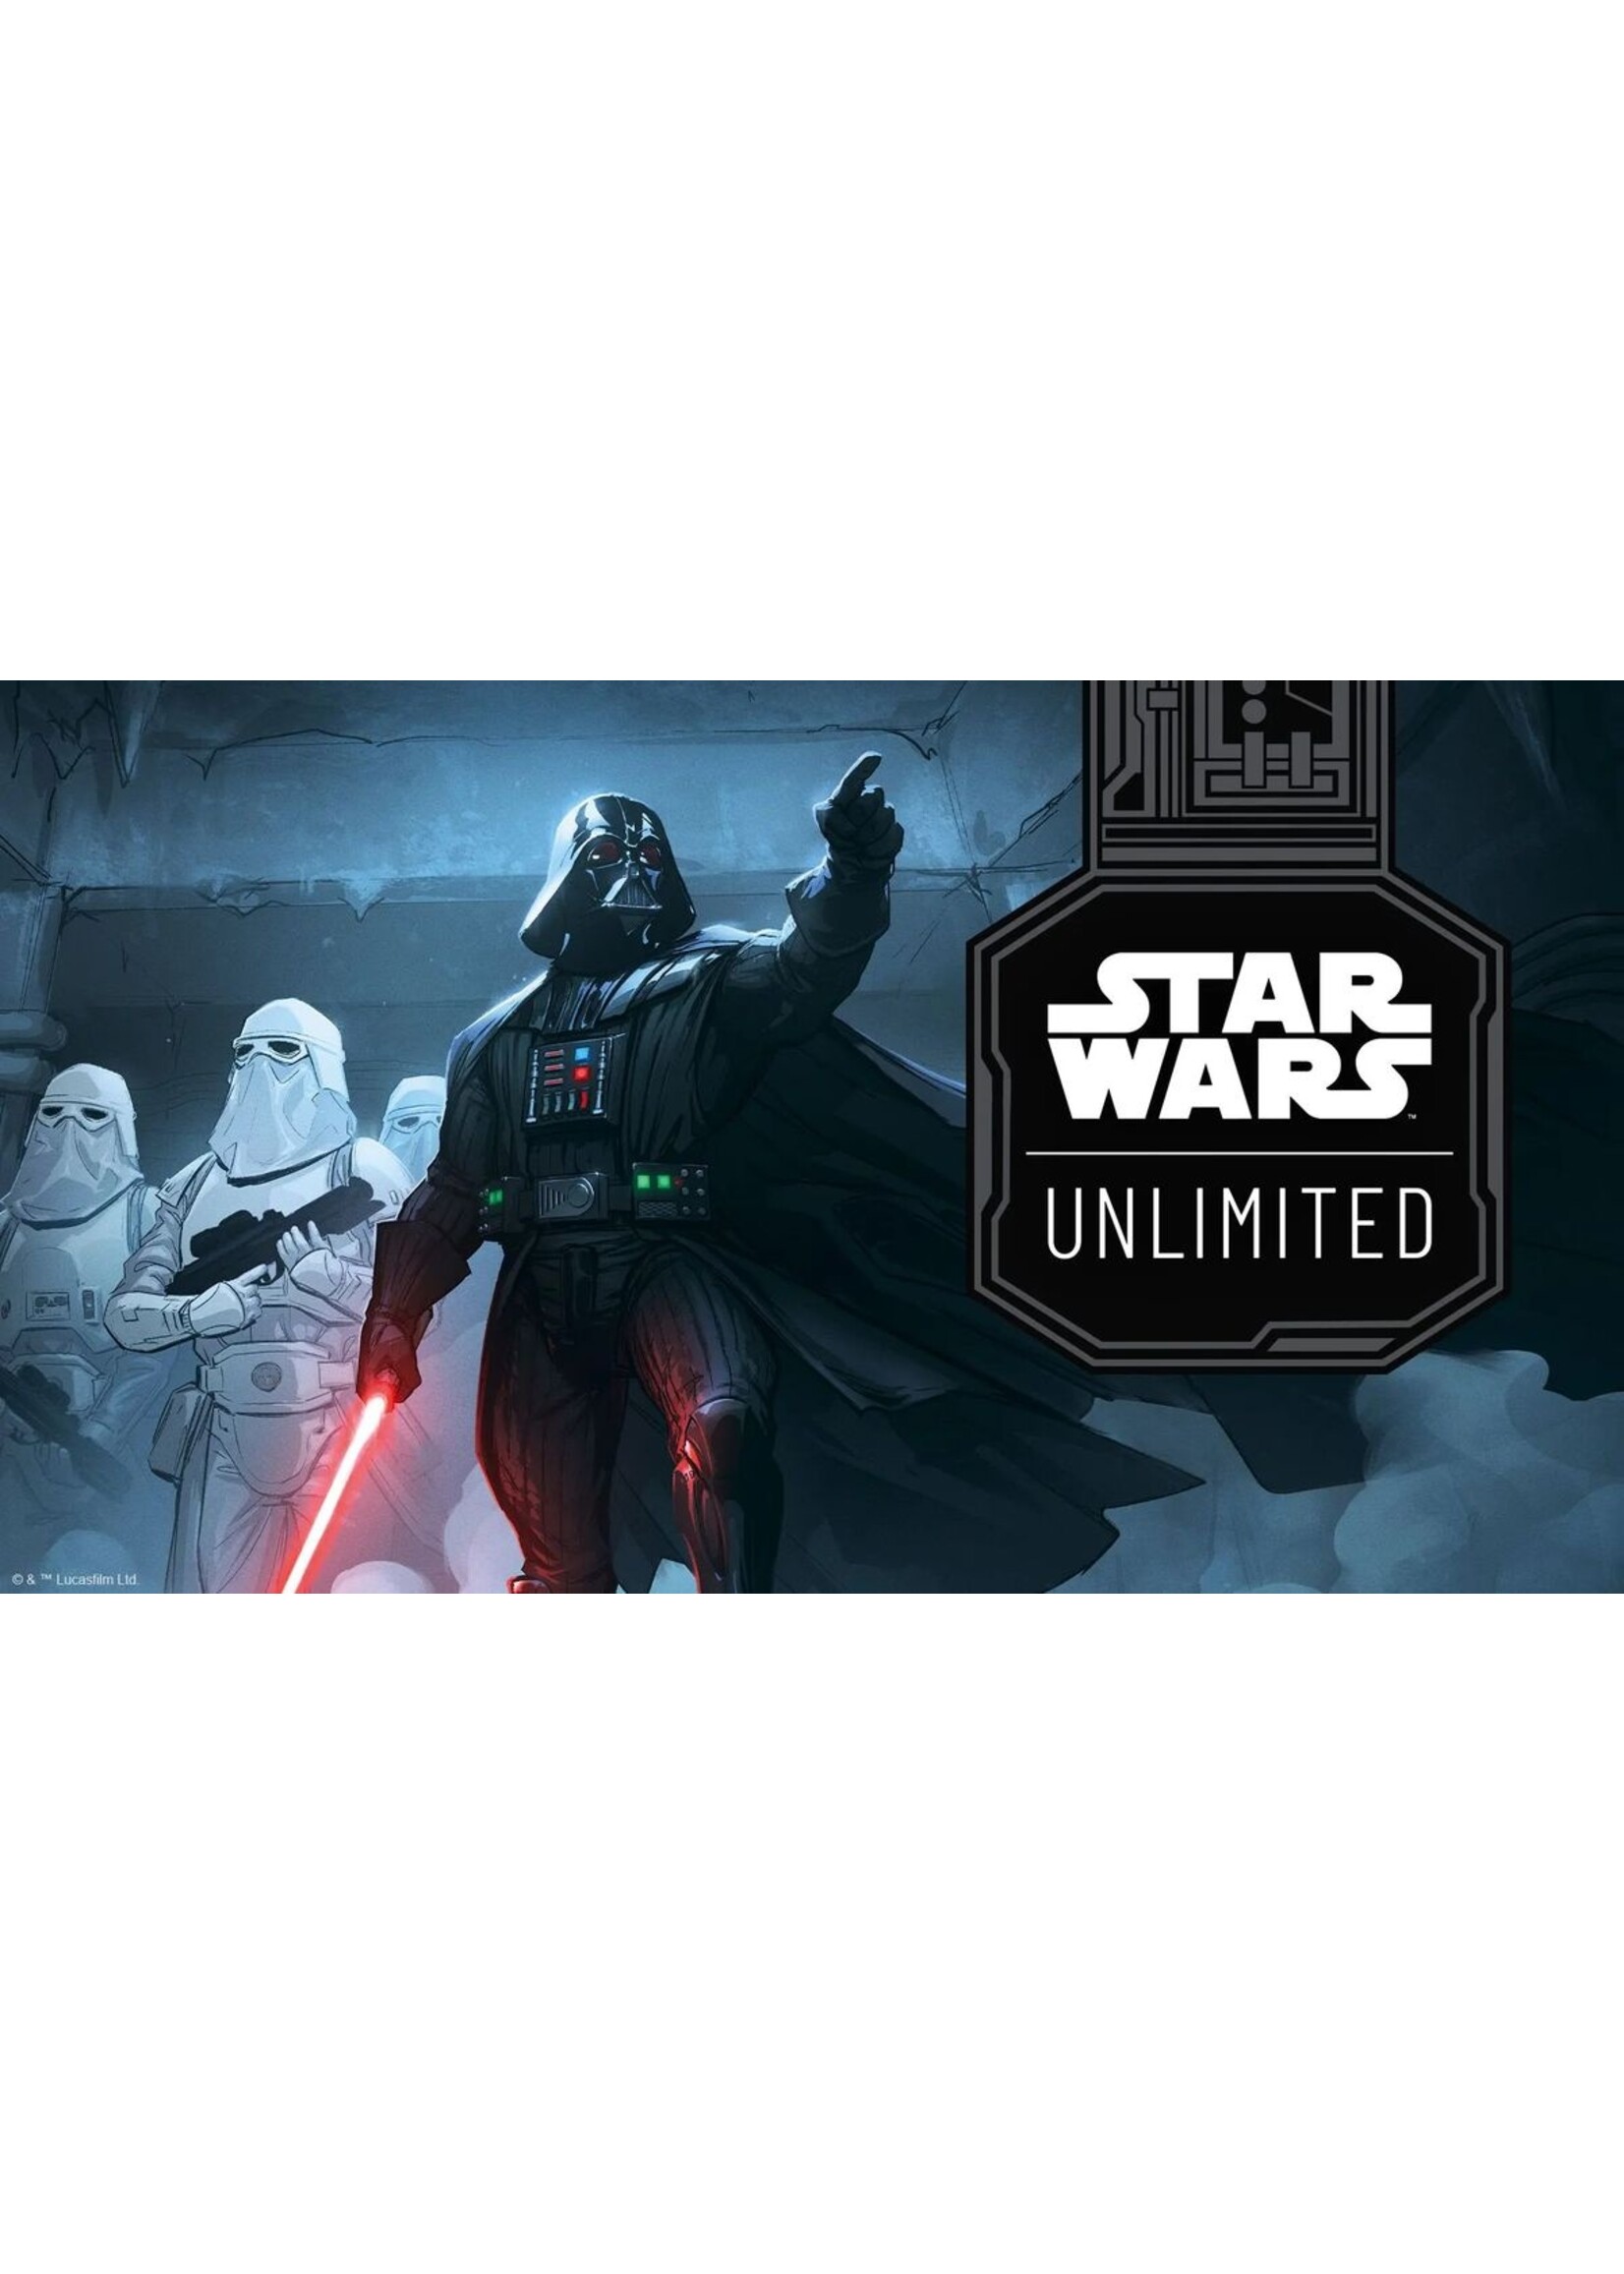 Star Wars Unlimited Store Showdown 5/24